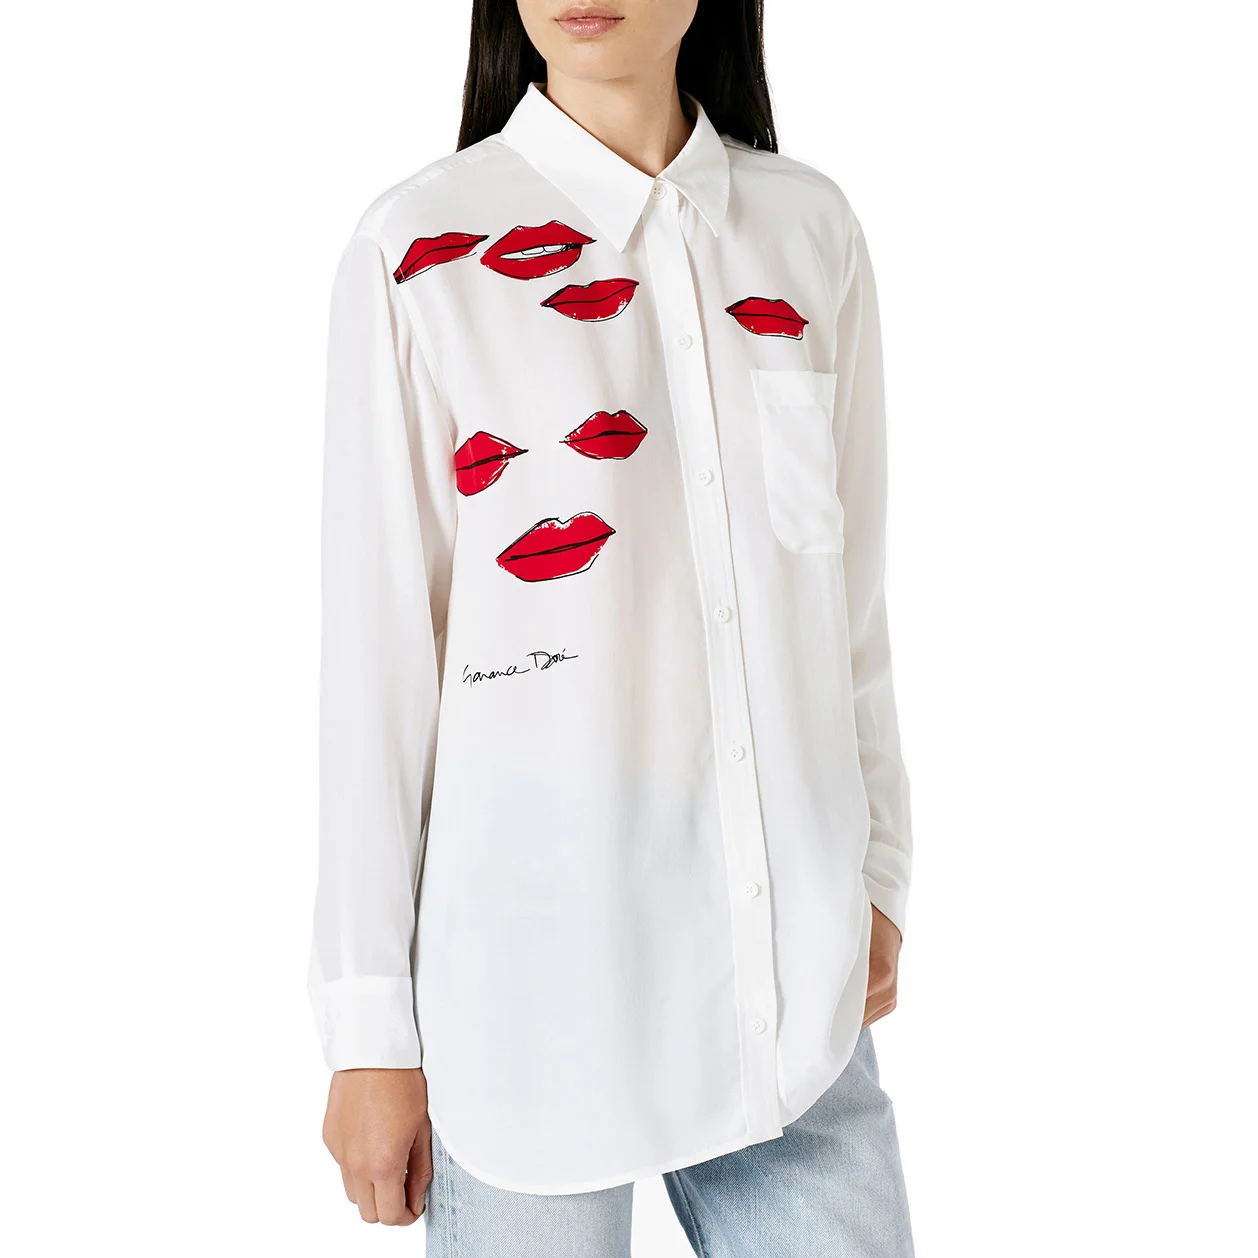 Casual Blouse Shirt Fashion 2016 Spring Autumn Women Blouses Sexy Lips Print Shirts Long Sleeve Turn Down Collar Blusas Tops